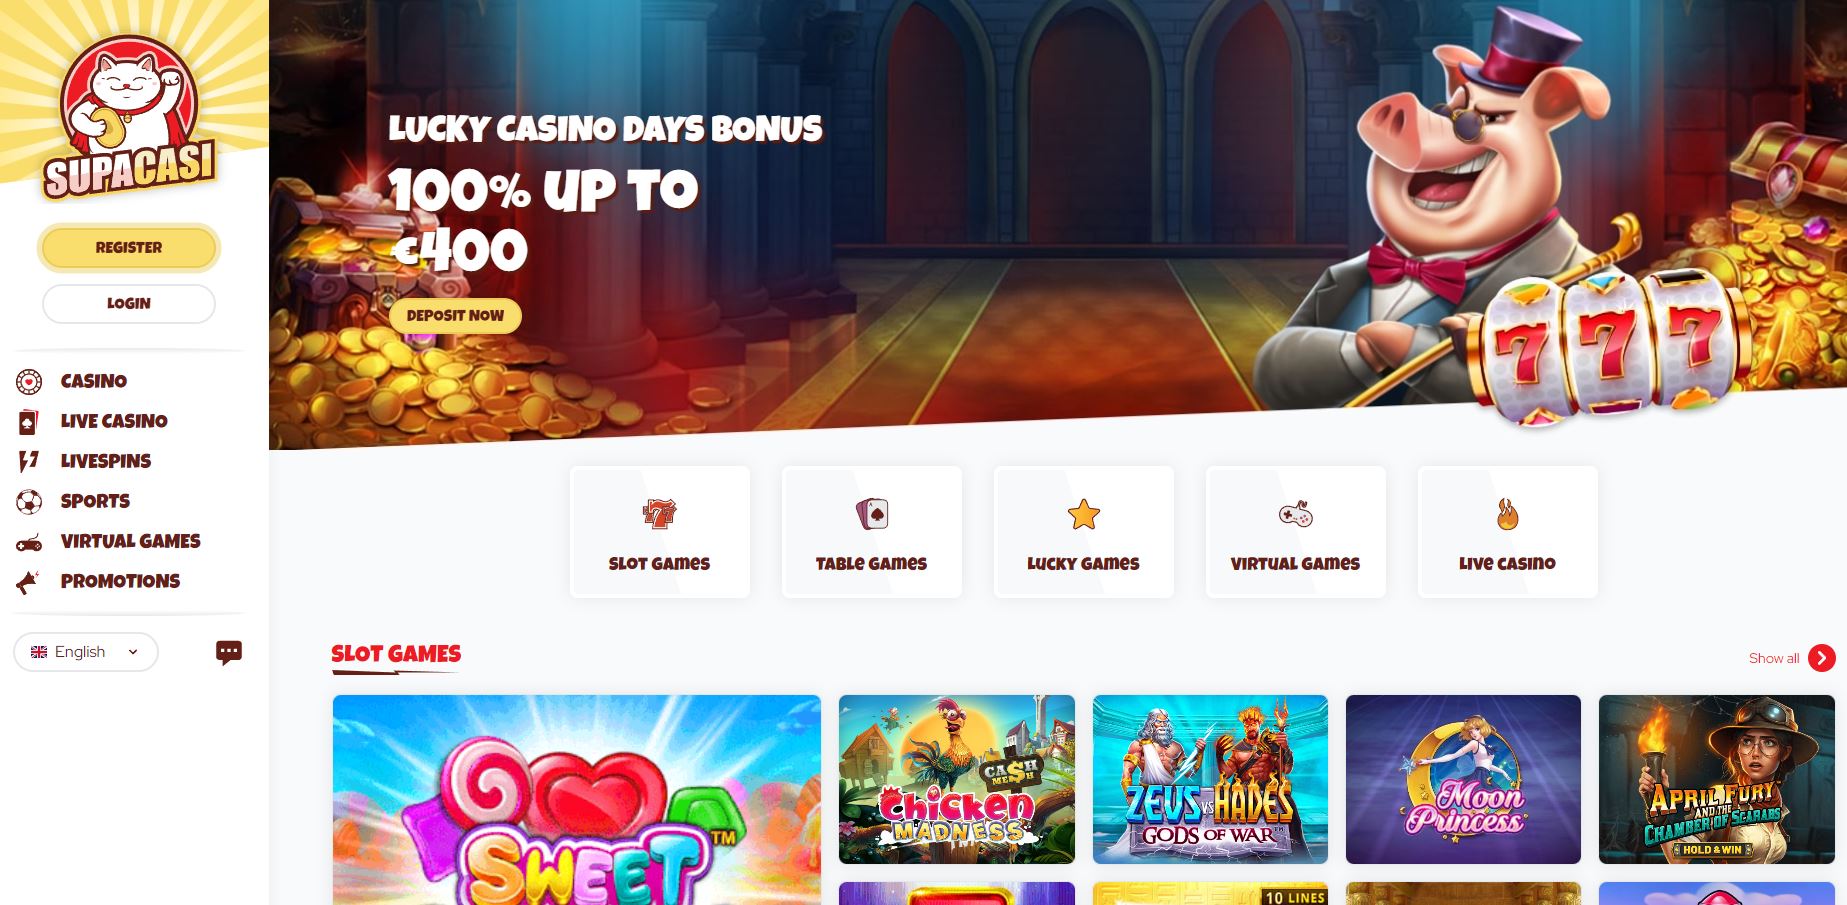 Supacasi, online blackjack casino site